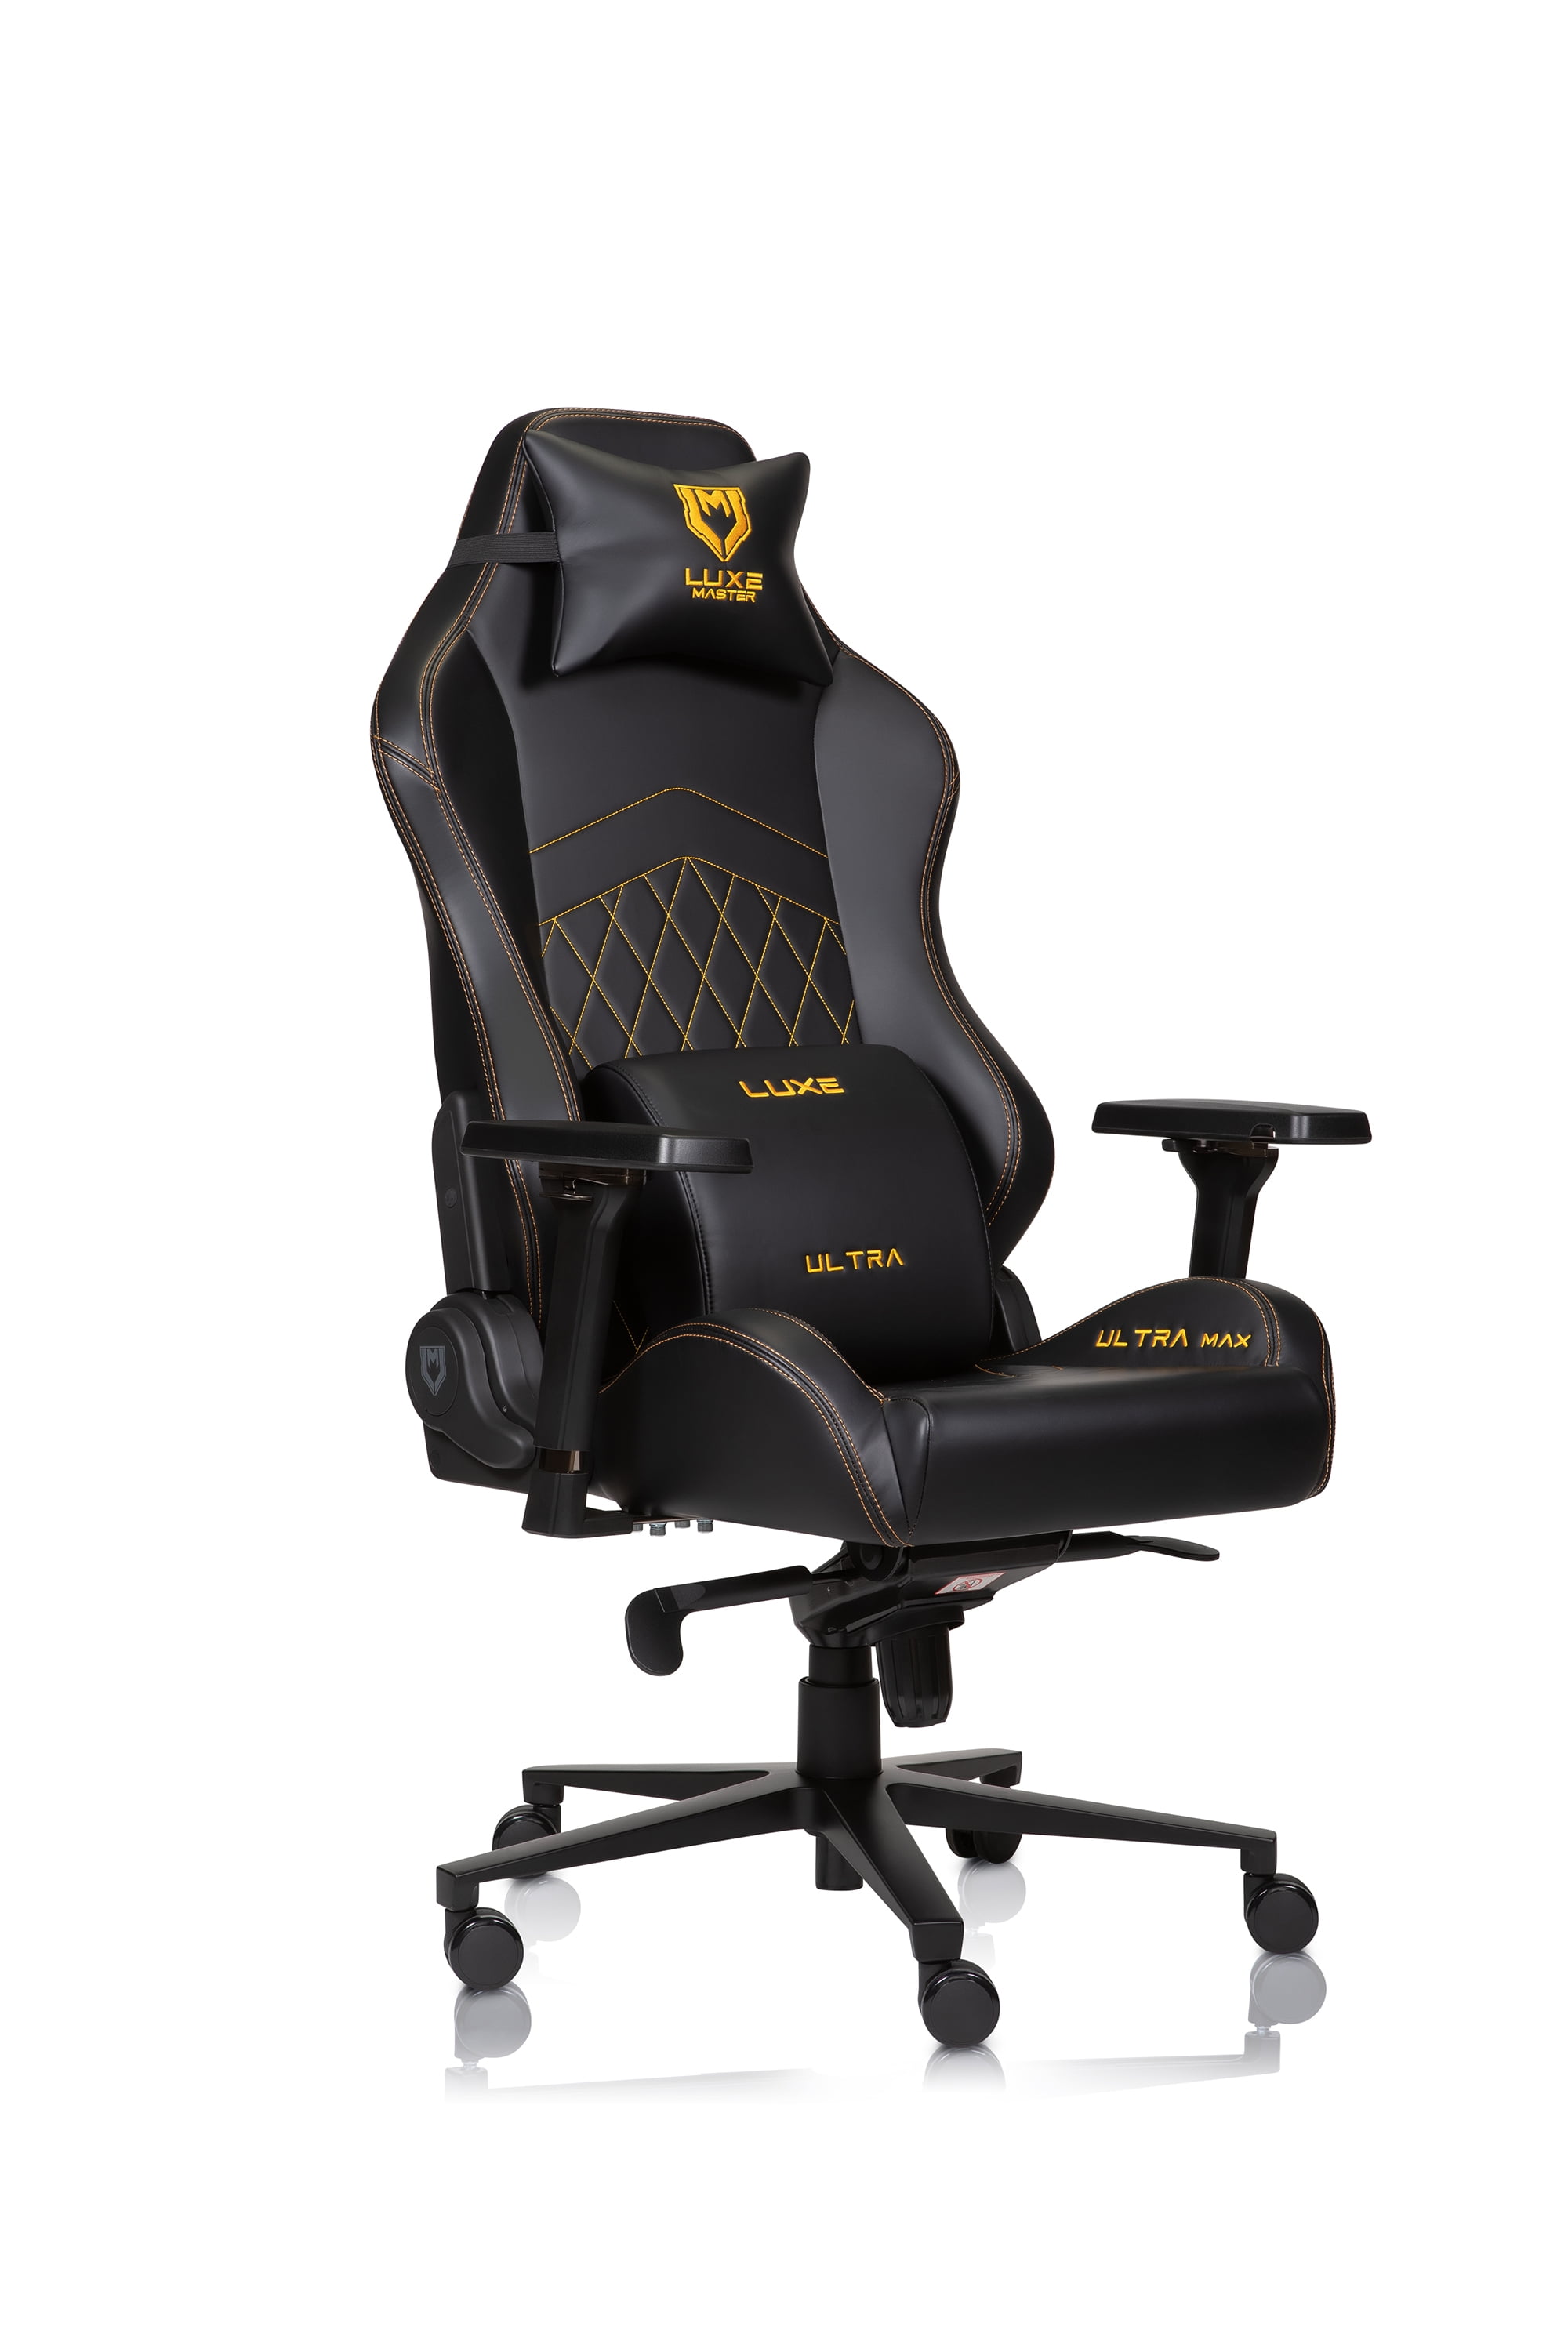 COUGAR ARMOR TITAN PRO ORANGE Gaming Chair - COUGAR ARMOR TITAN PRO ROYAL  Gaming Chair